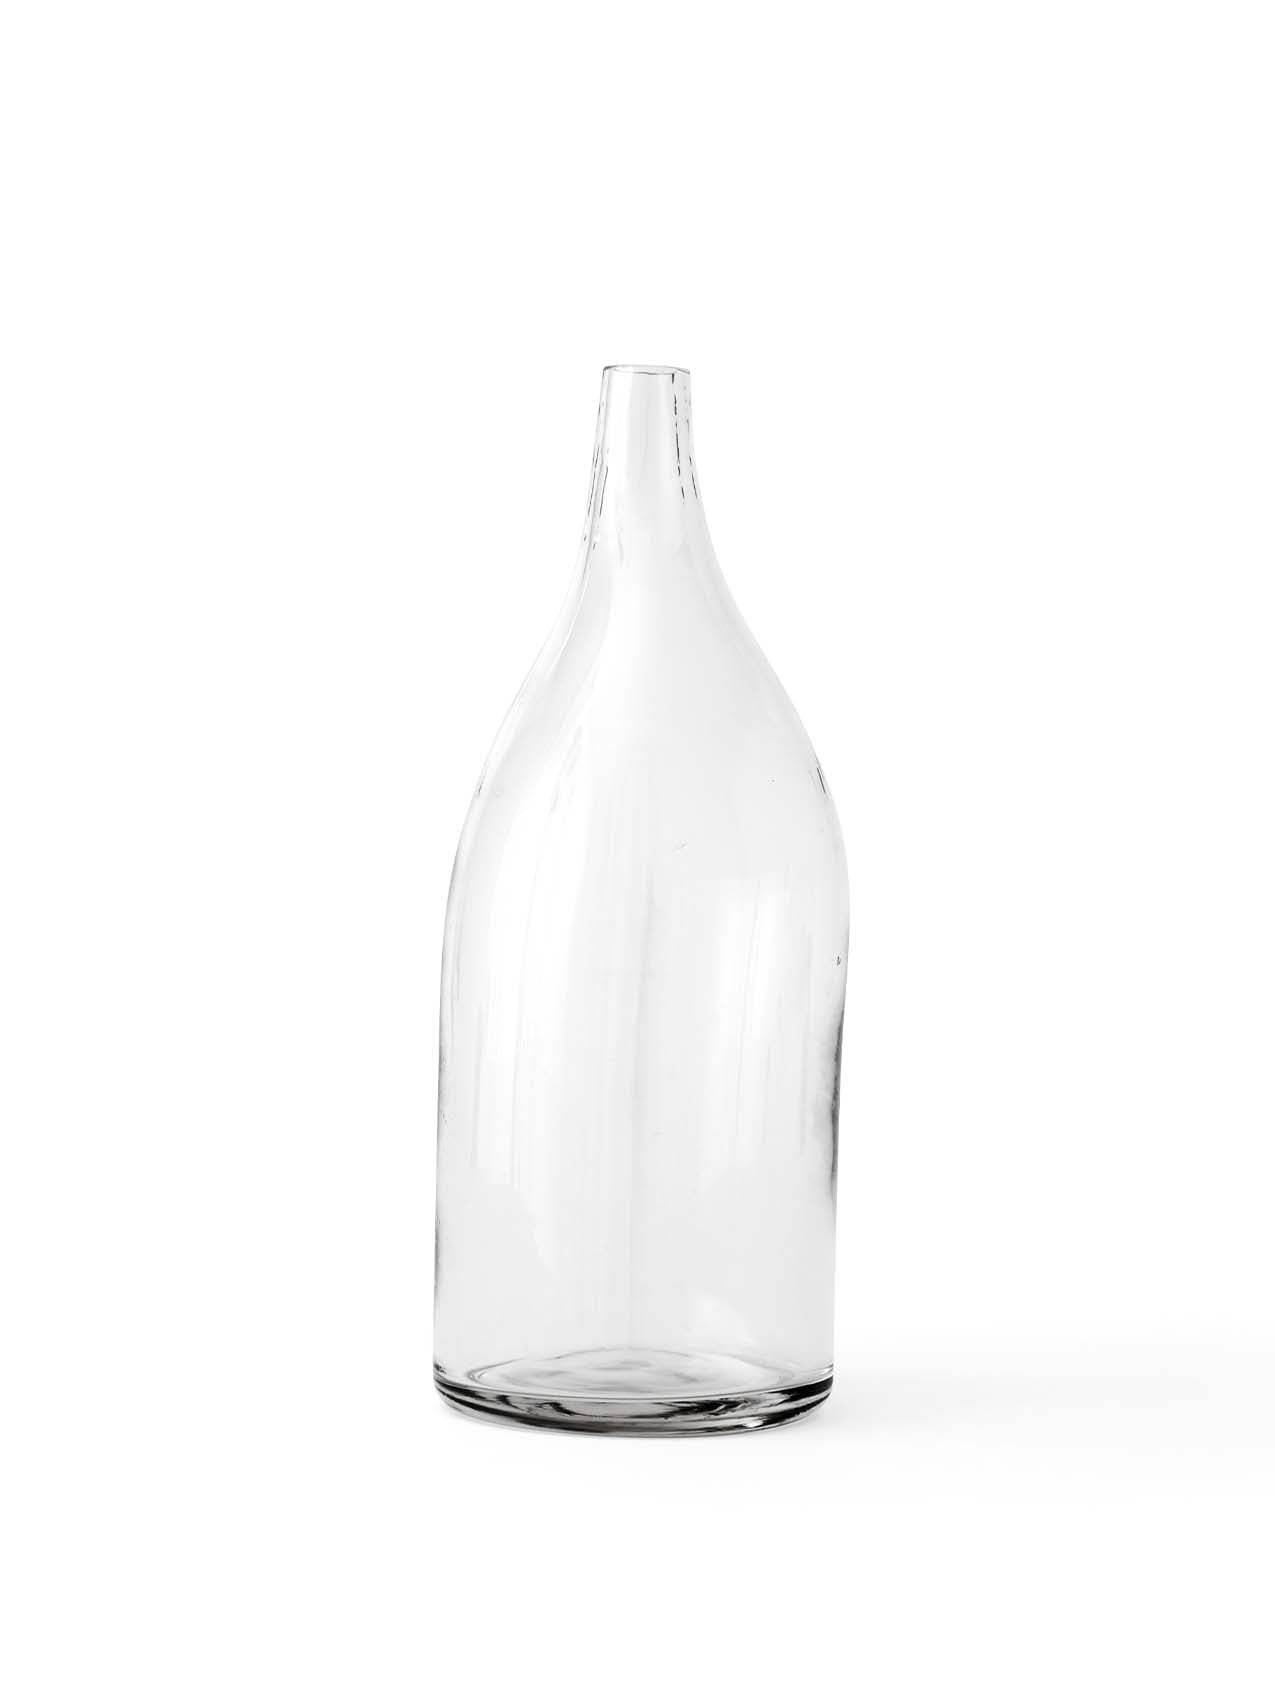 Audo Copenhagen Strandgade drinking glass, 2 pcs, 9 cm, clear